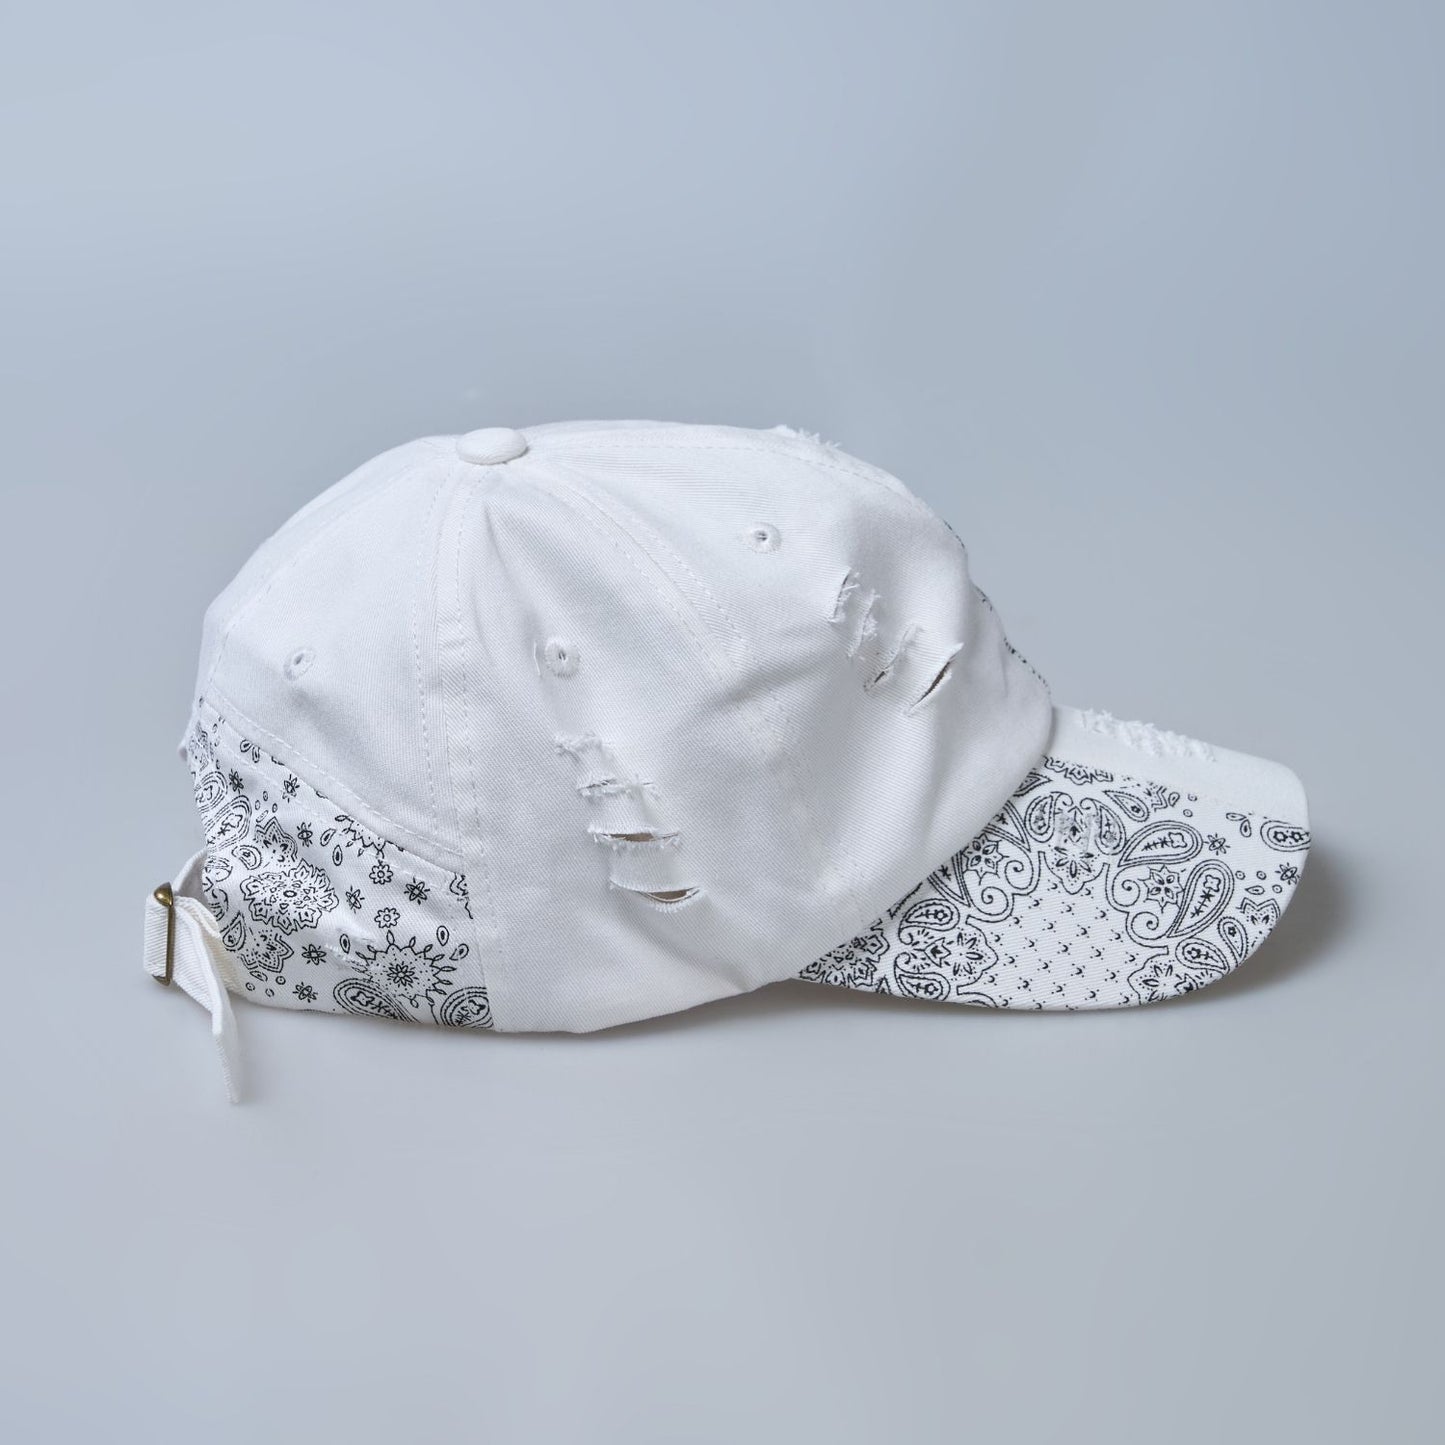 white colored, wide brim designer cap for men with adjustable strap, side view.